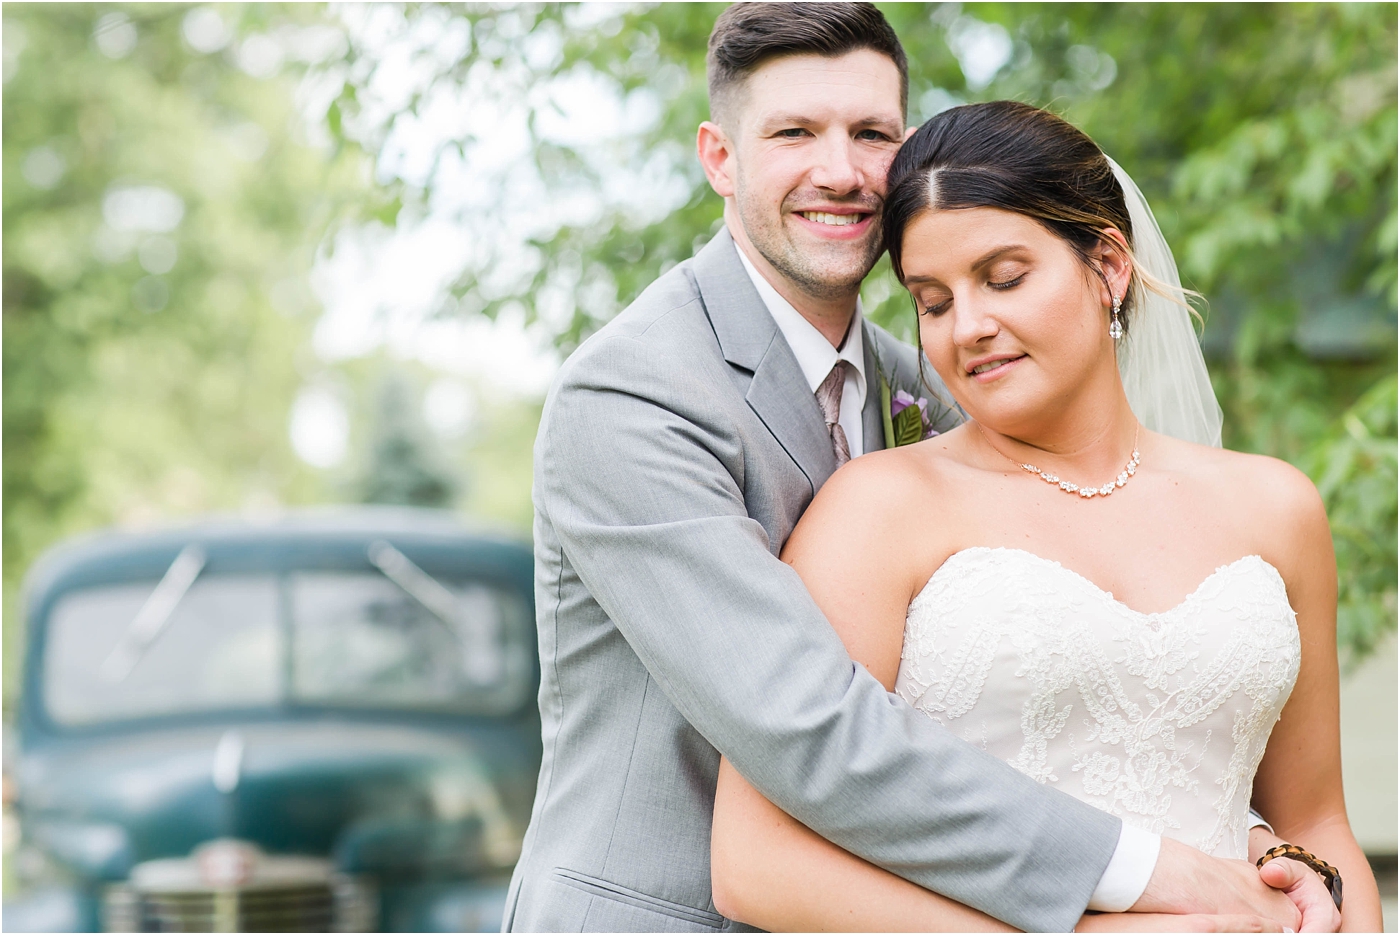 Loren Jackson Photography,Photographer Akron Ohio,Rivercrest Farm Wedding,cleveland wedding photography,rustic wedding,